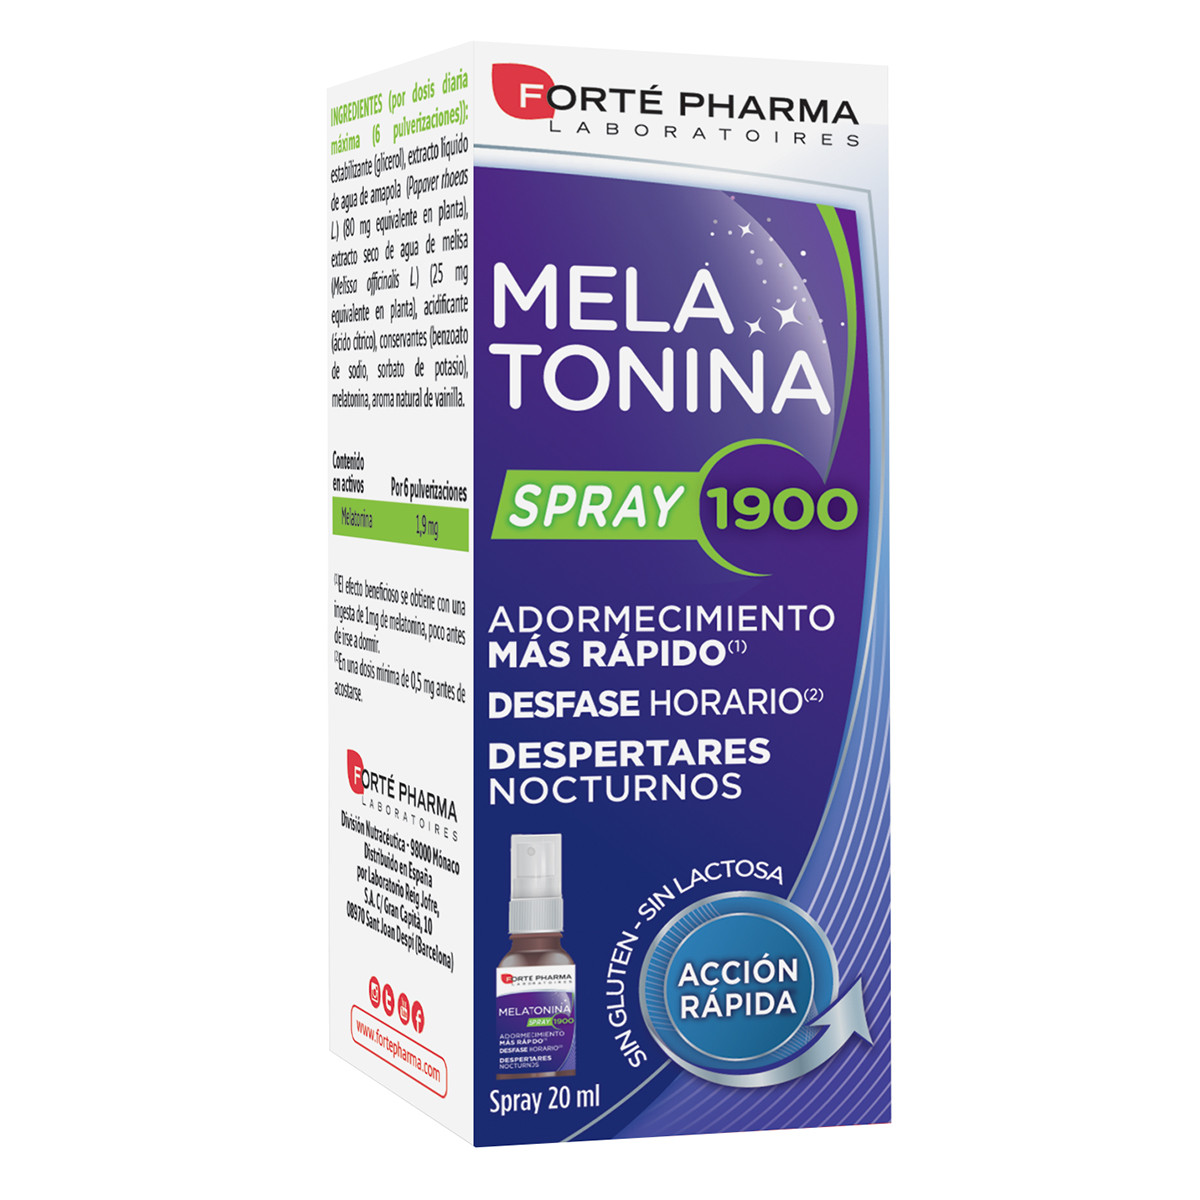 Imagen de Forte Pharma Melatonina spray 1900 20ml